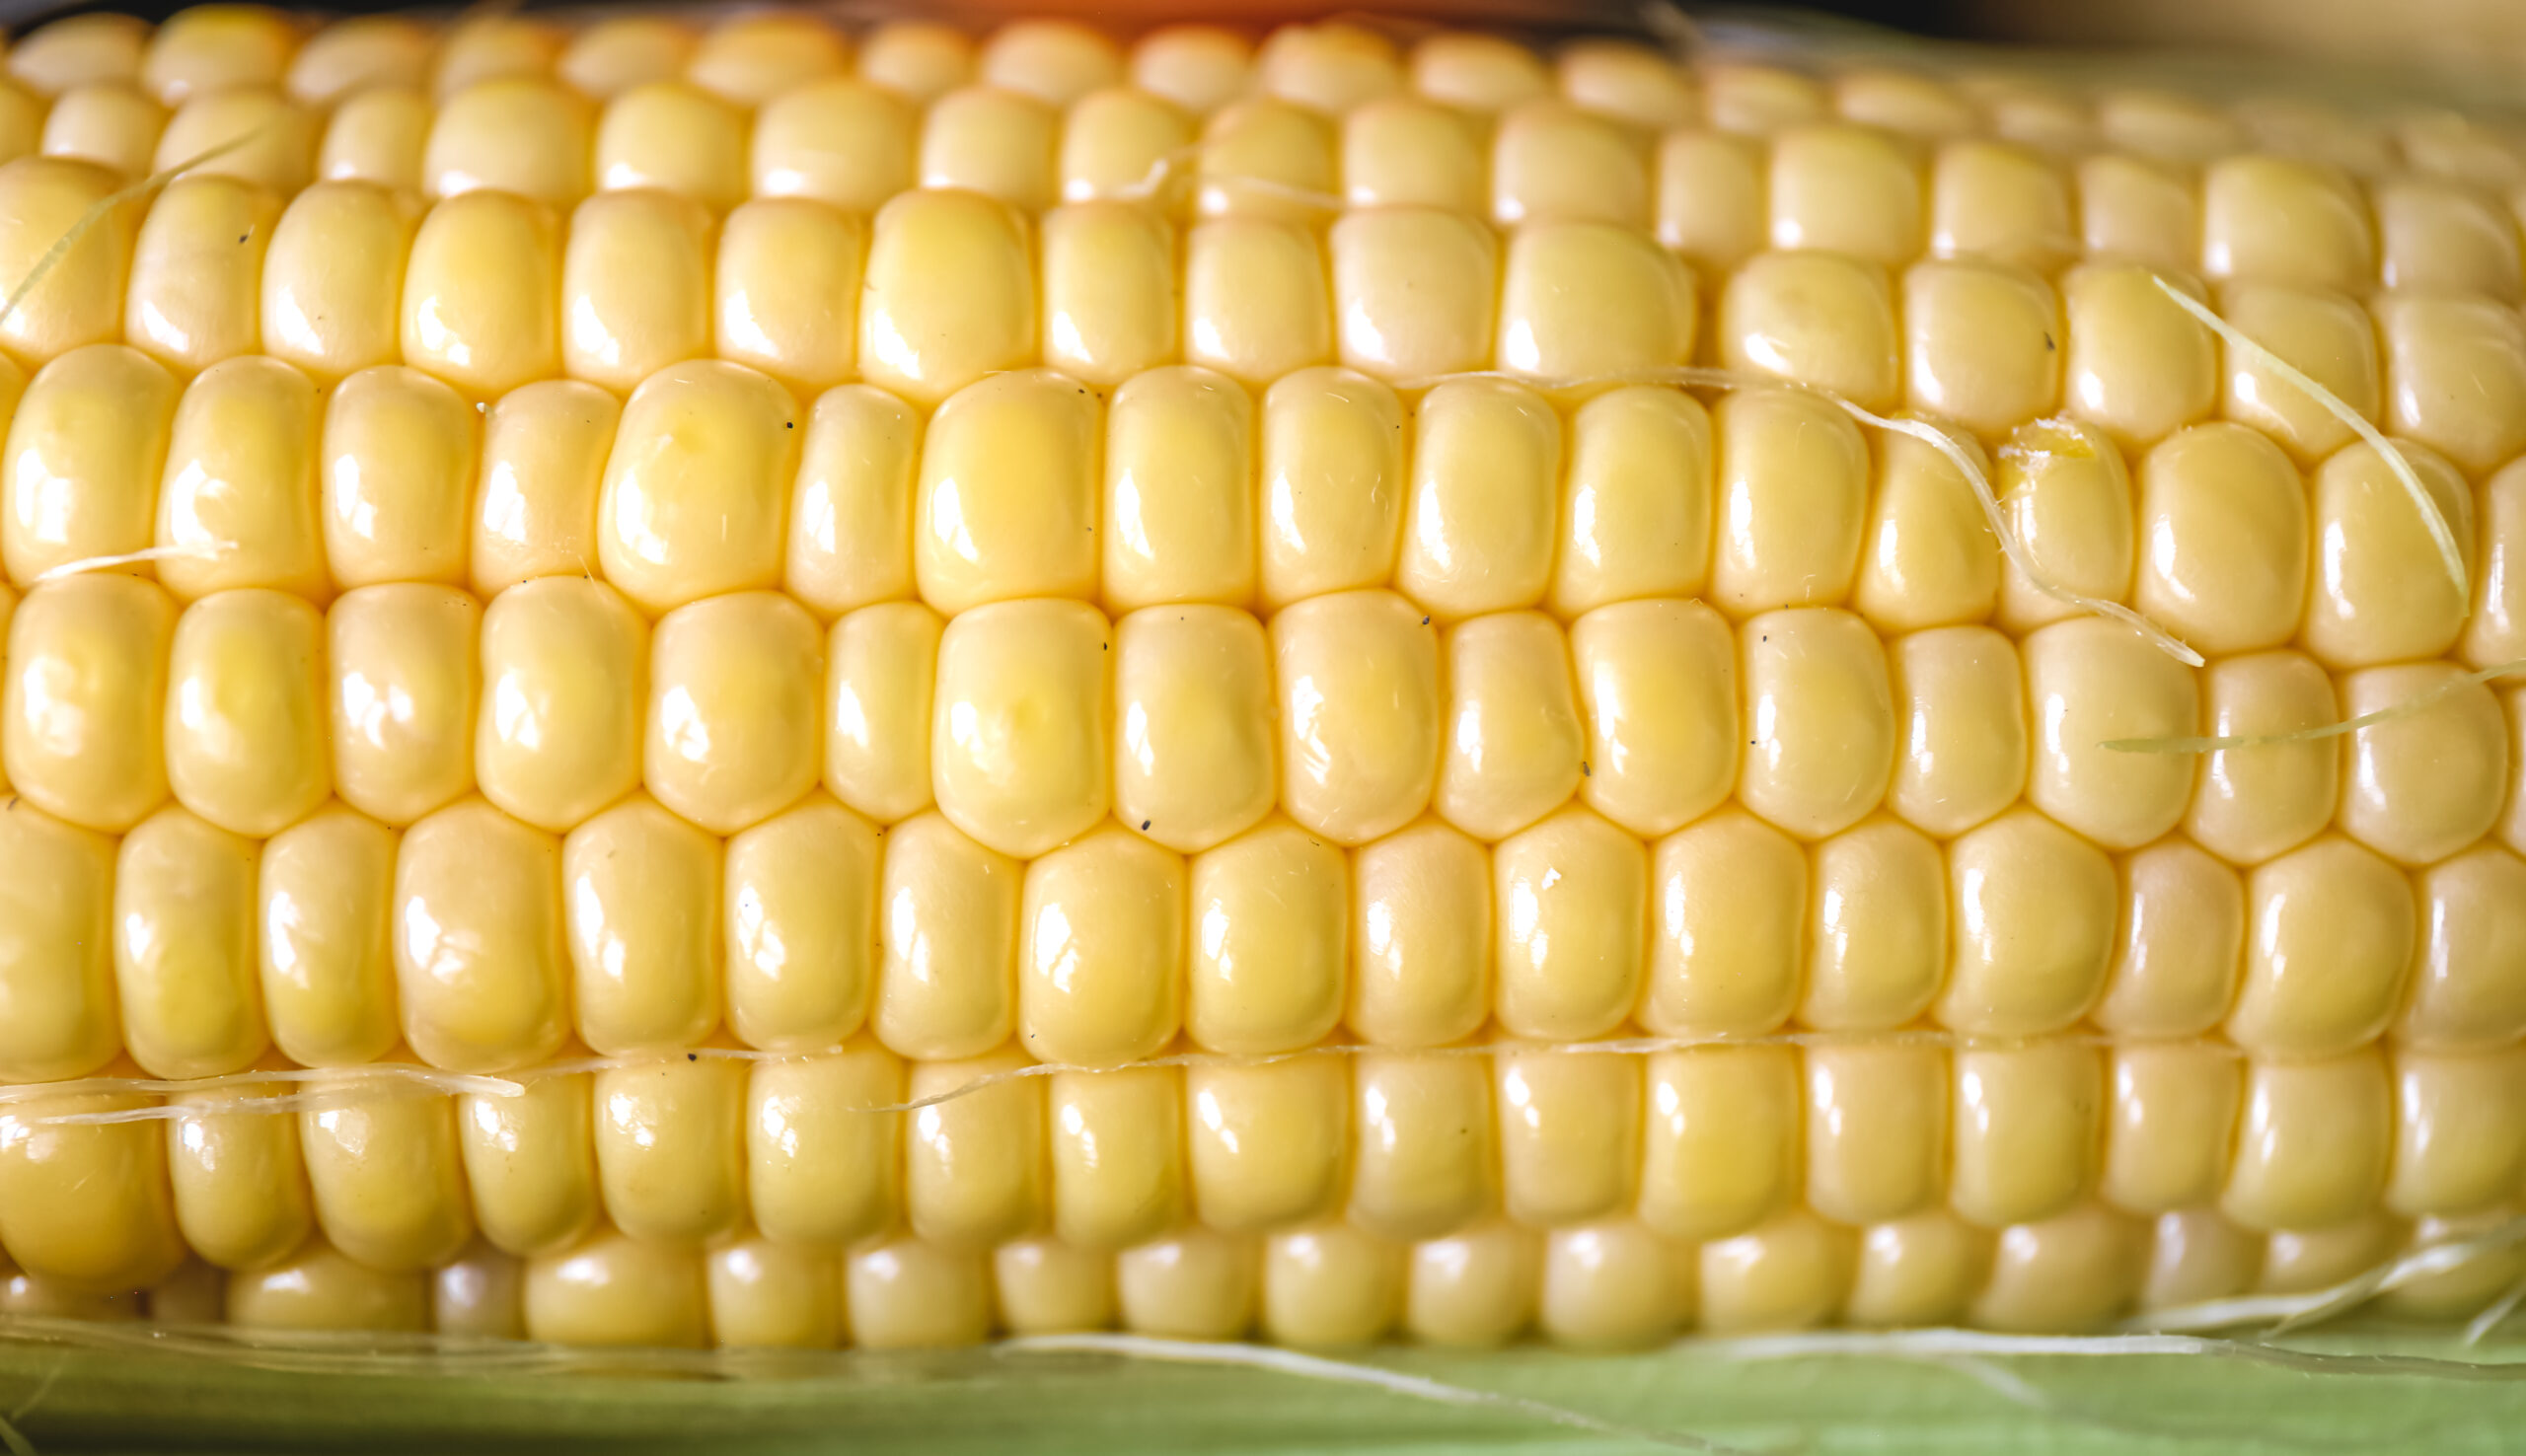 imagen de un maiz